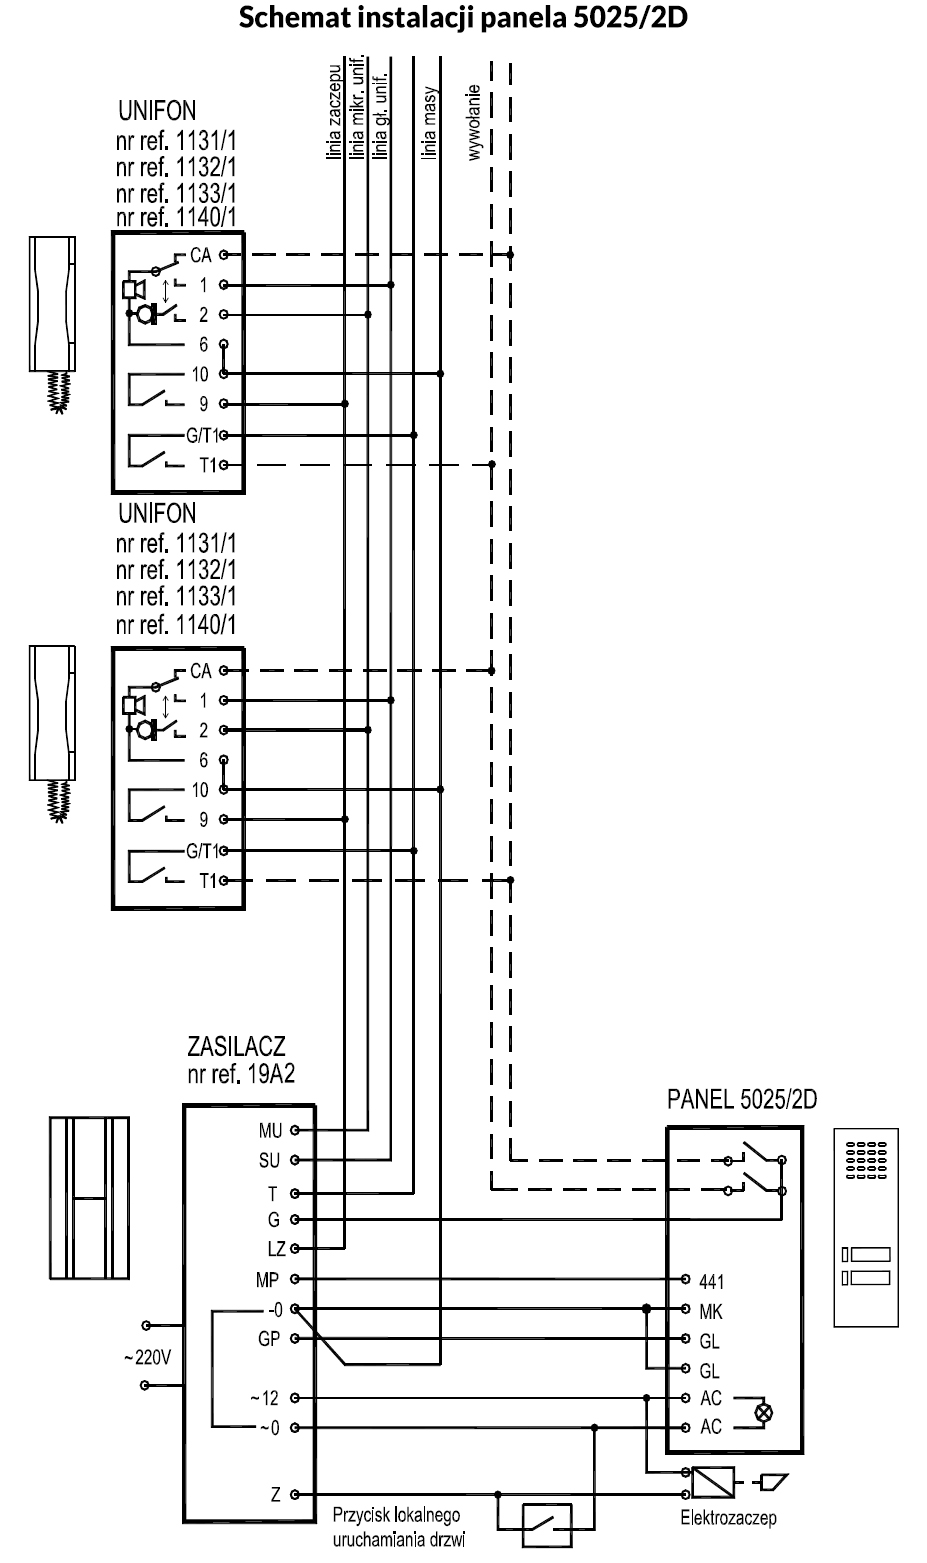 Schemat instalacji panela 5025/2D